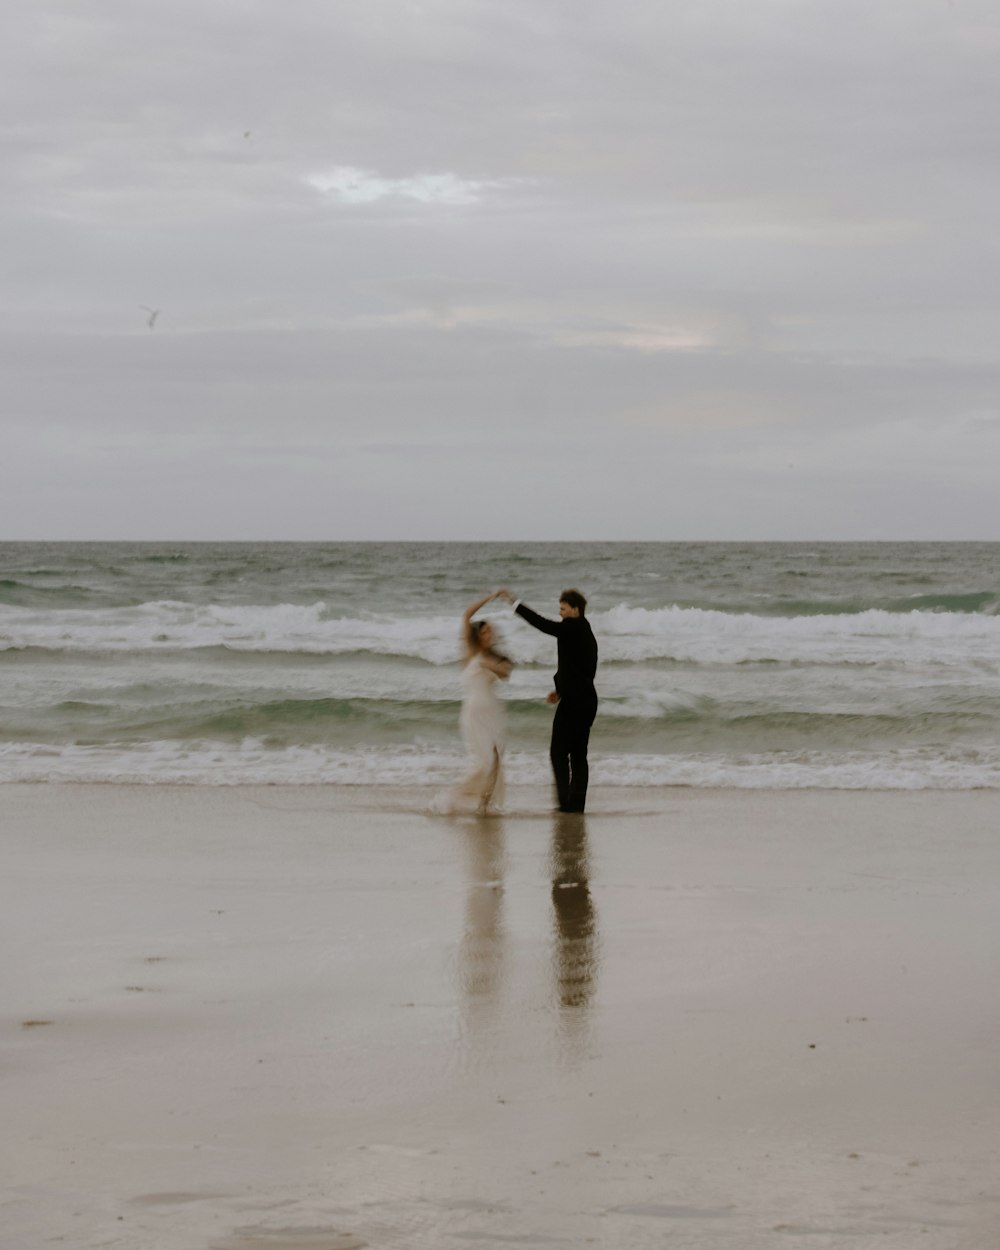 a man and a woman on a beach